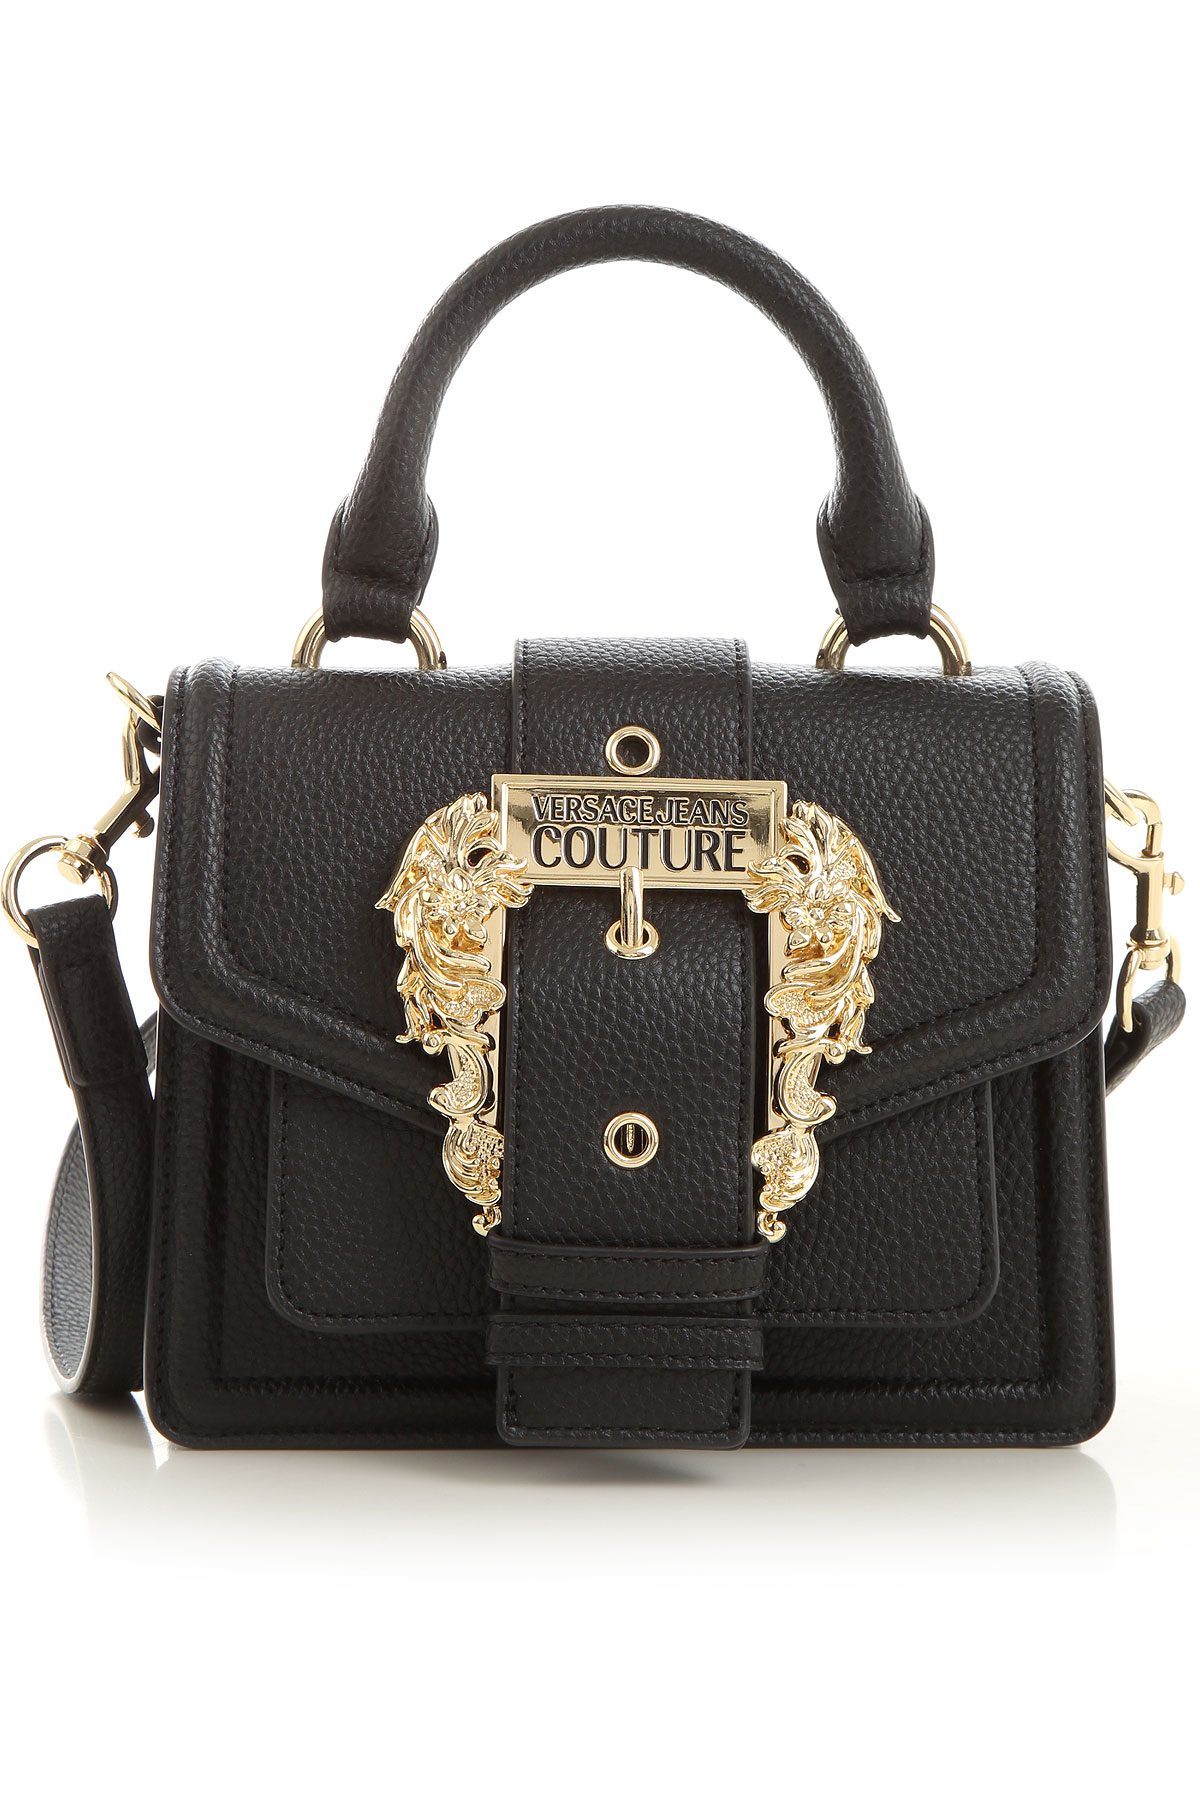 Handbags Versace Jeans Couture , Style code: e1vwabf3-71578-899